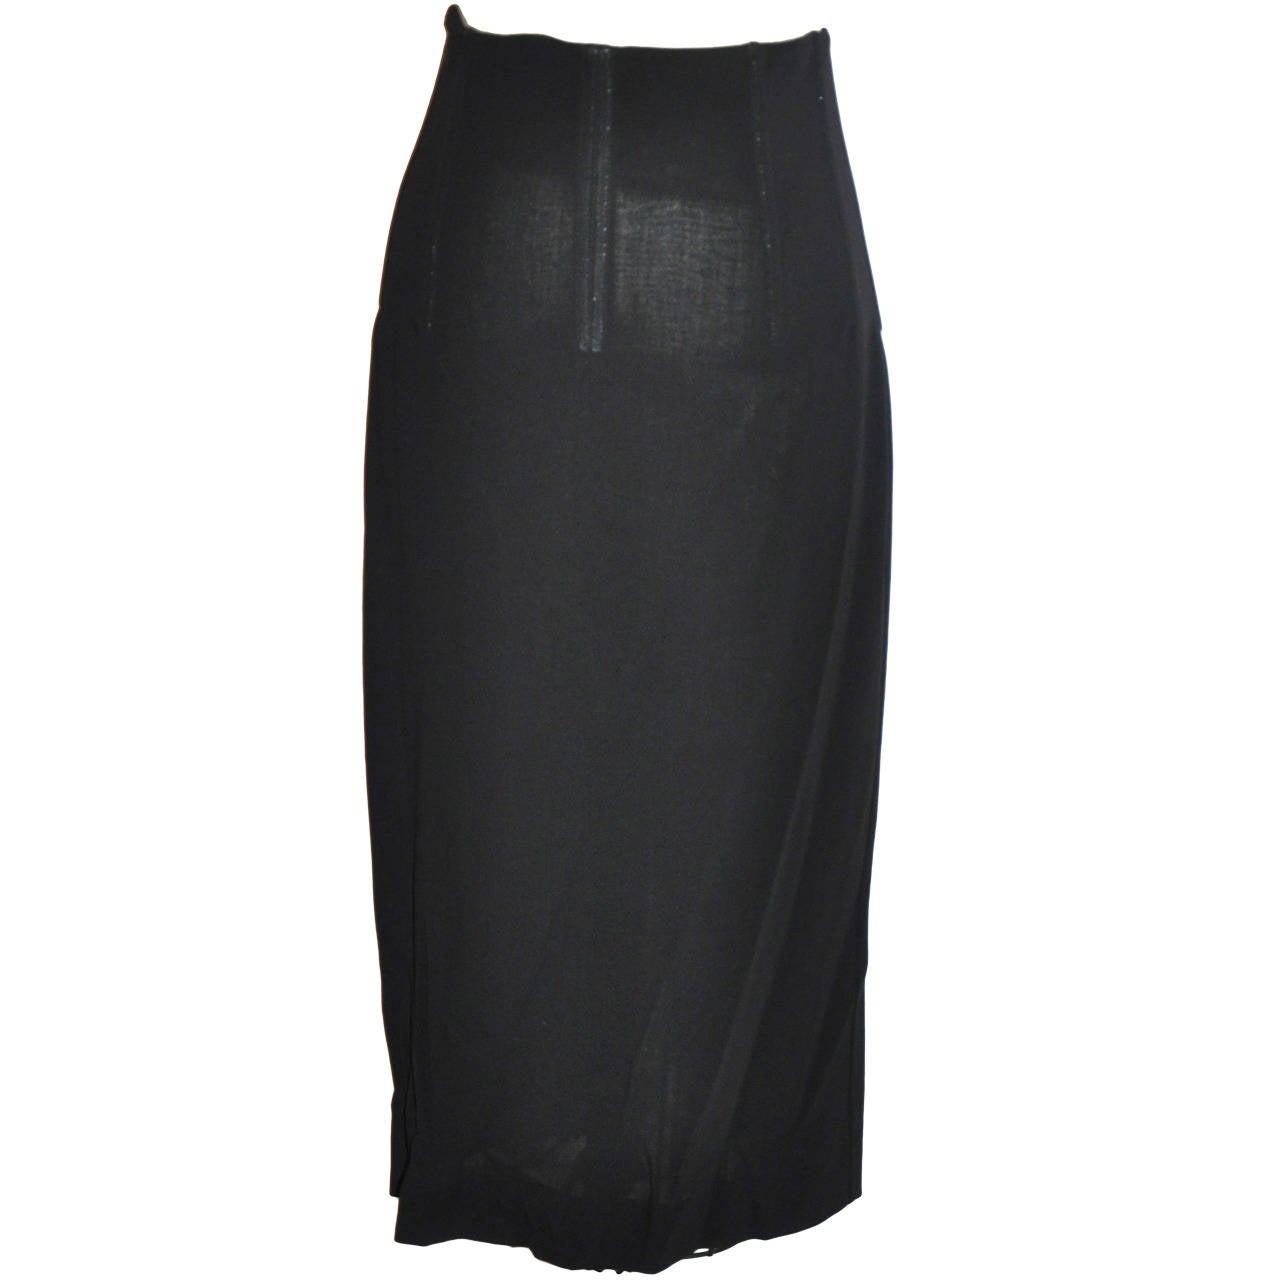 Dolce & Gabbana Form-Fitting Black Skirt with Boning